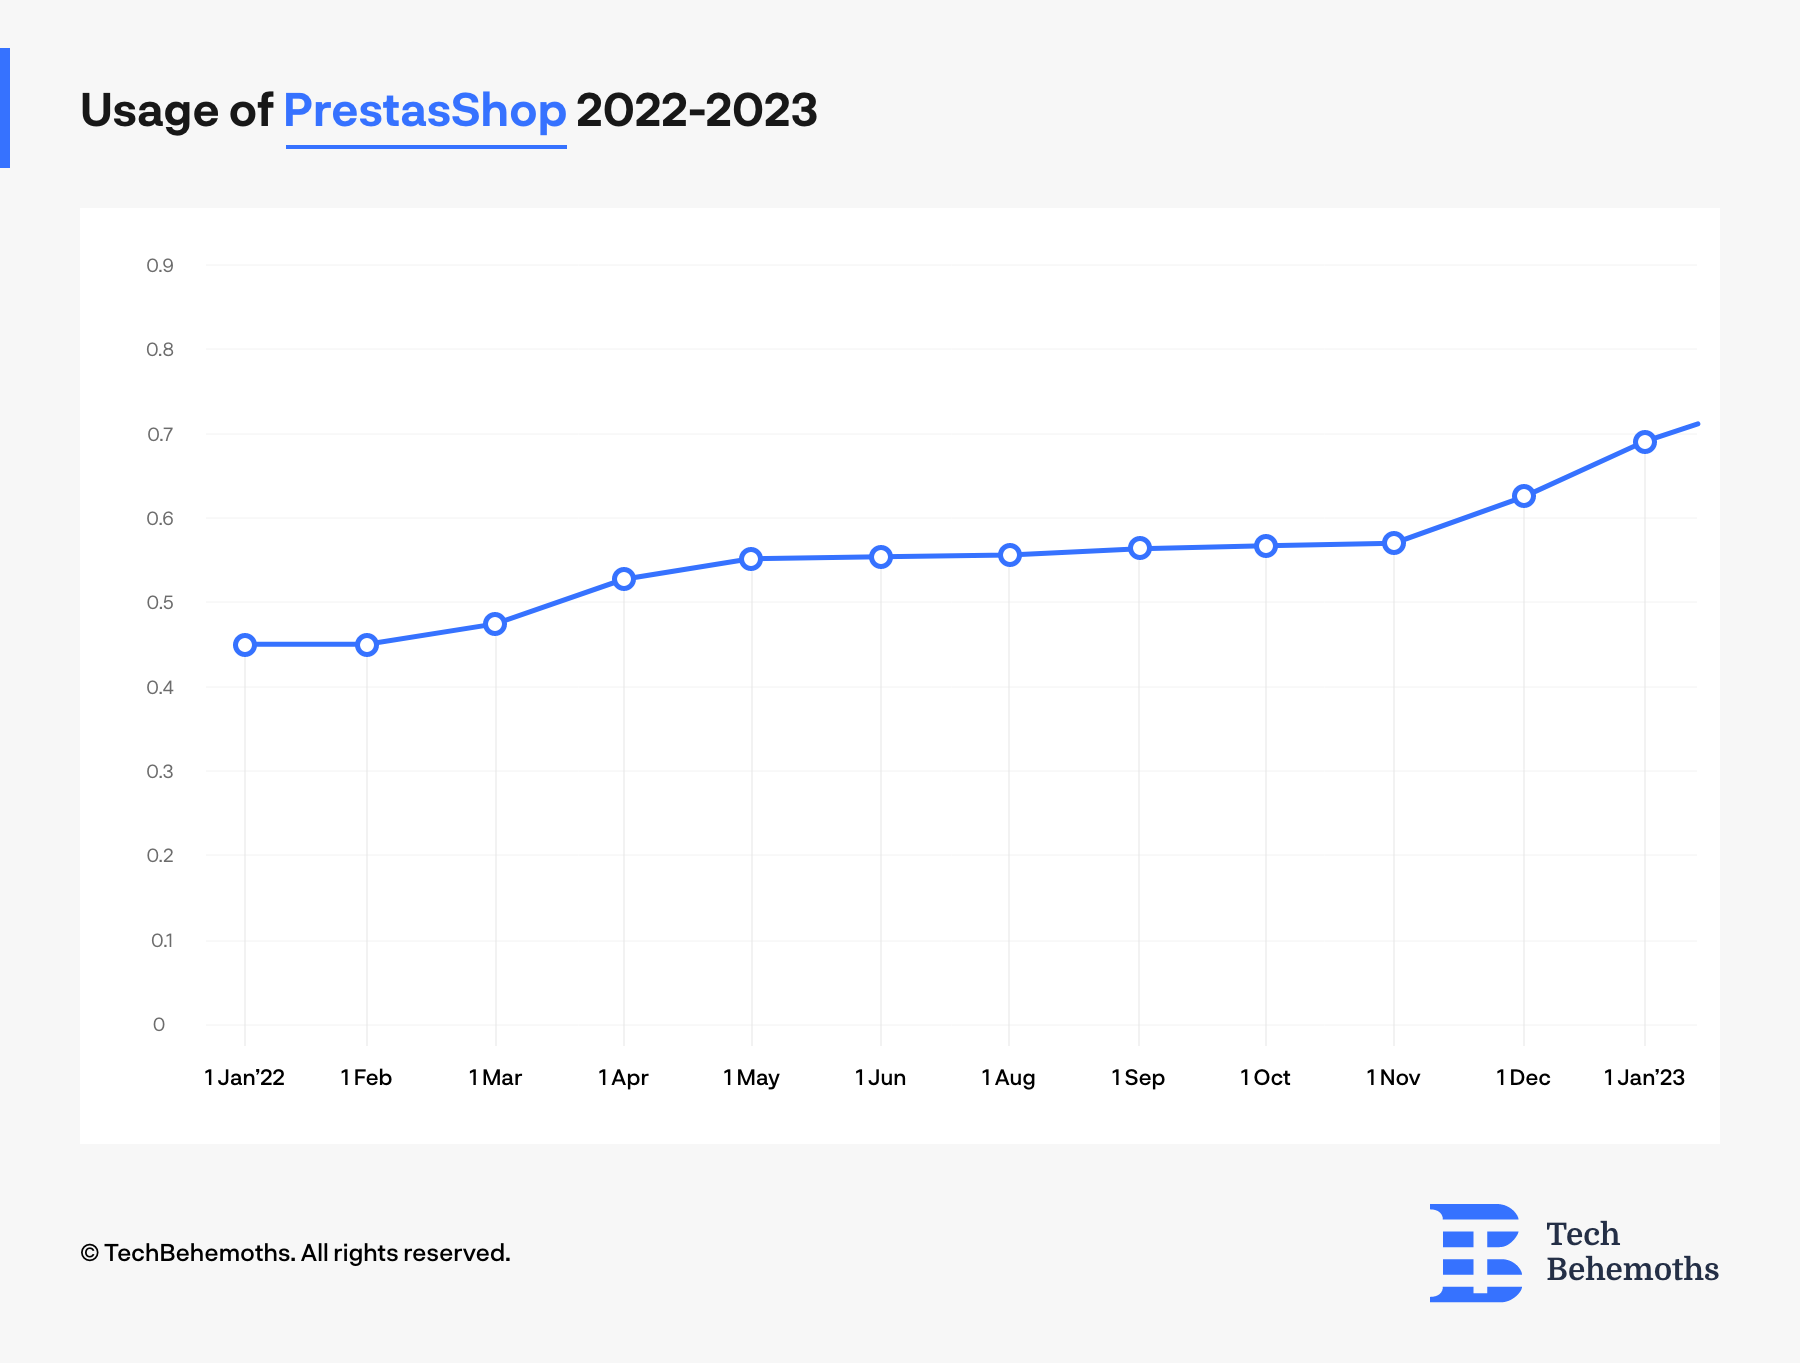 prestashop usage between 2022-2023